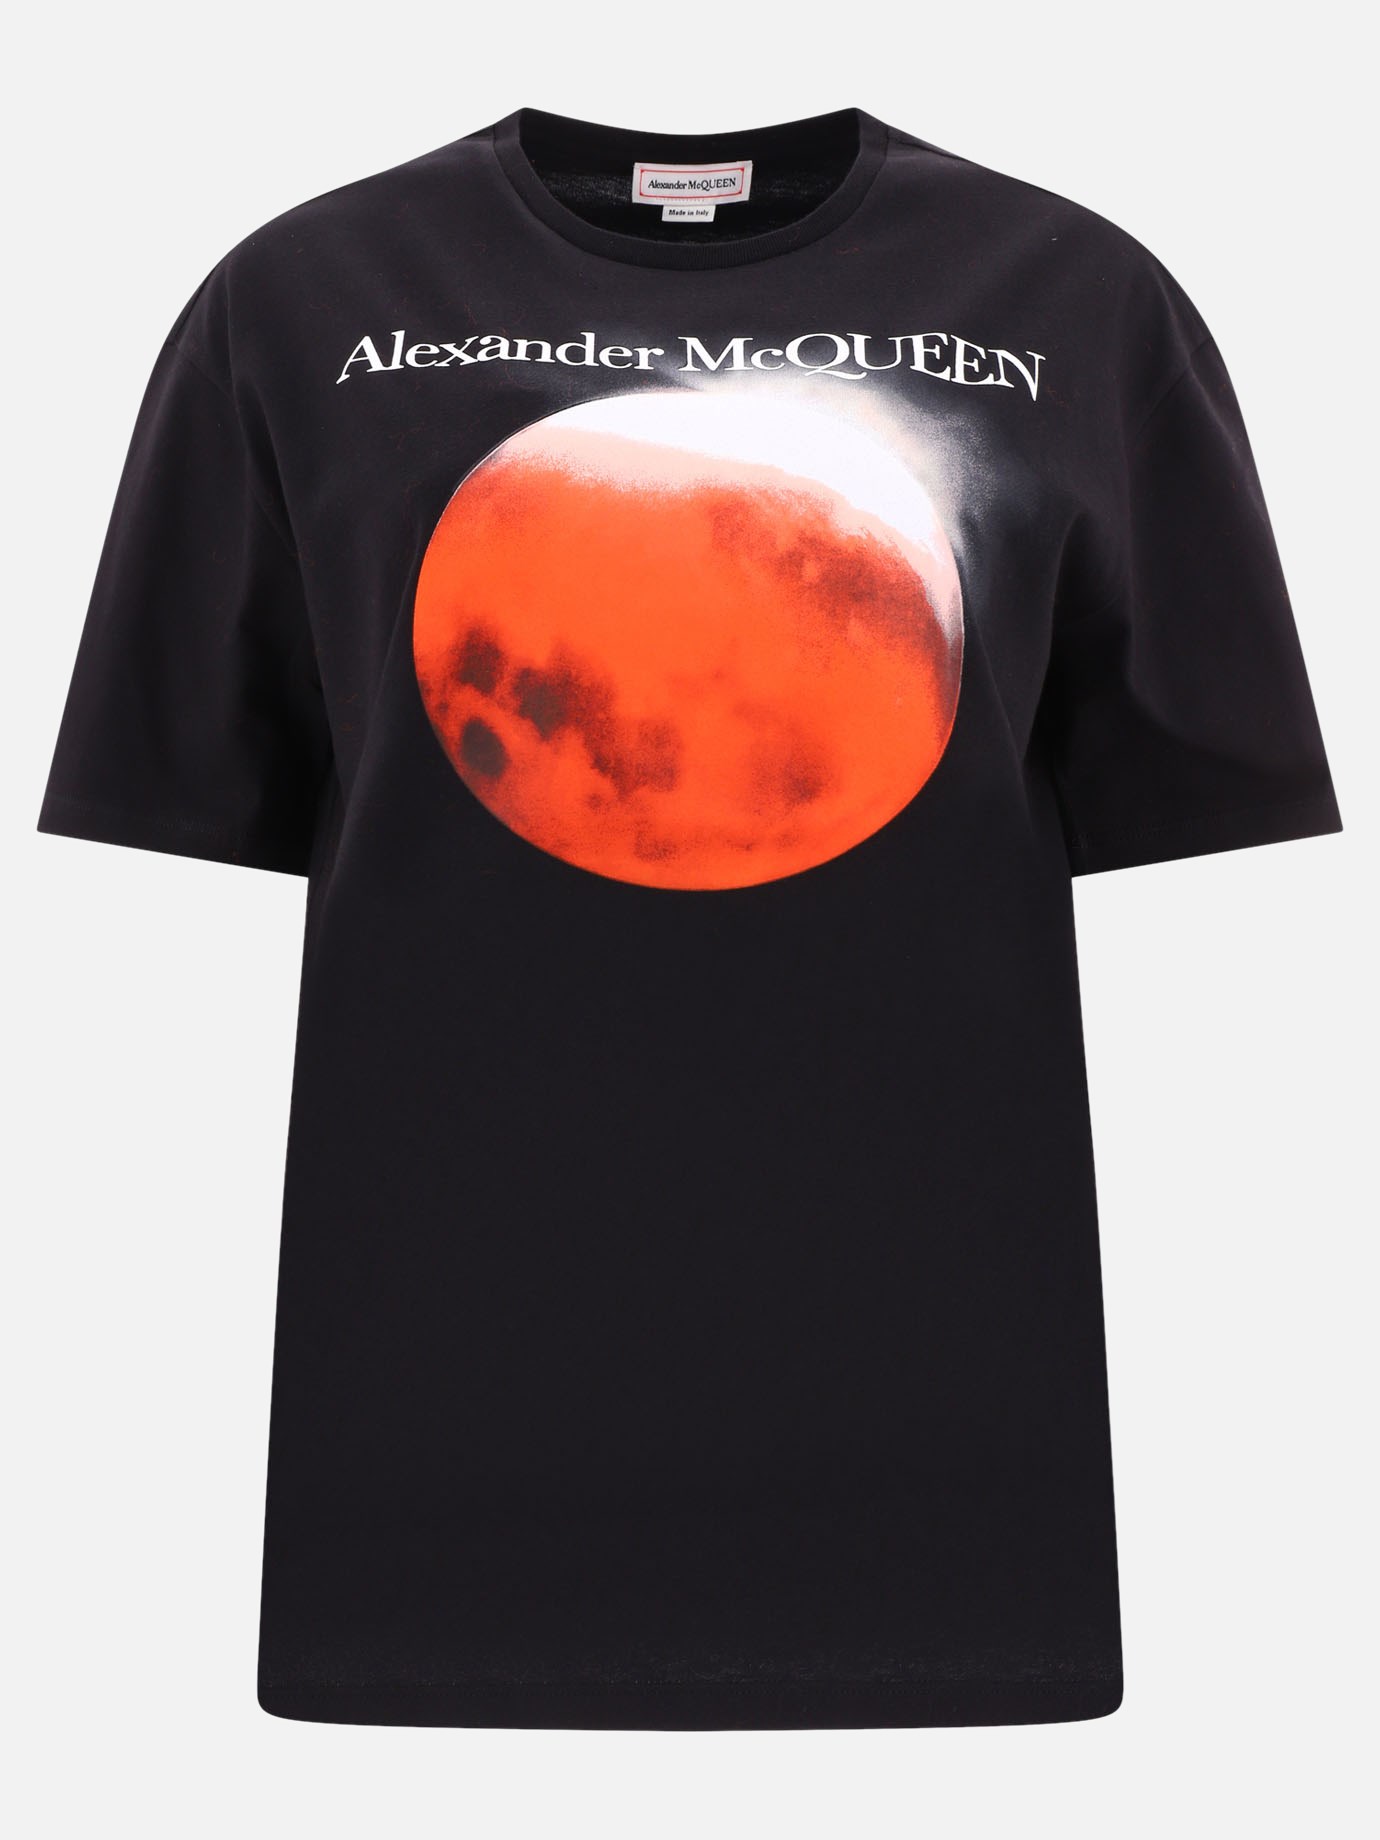  Red Moon  t-shirtby Alexander McQueen - 4